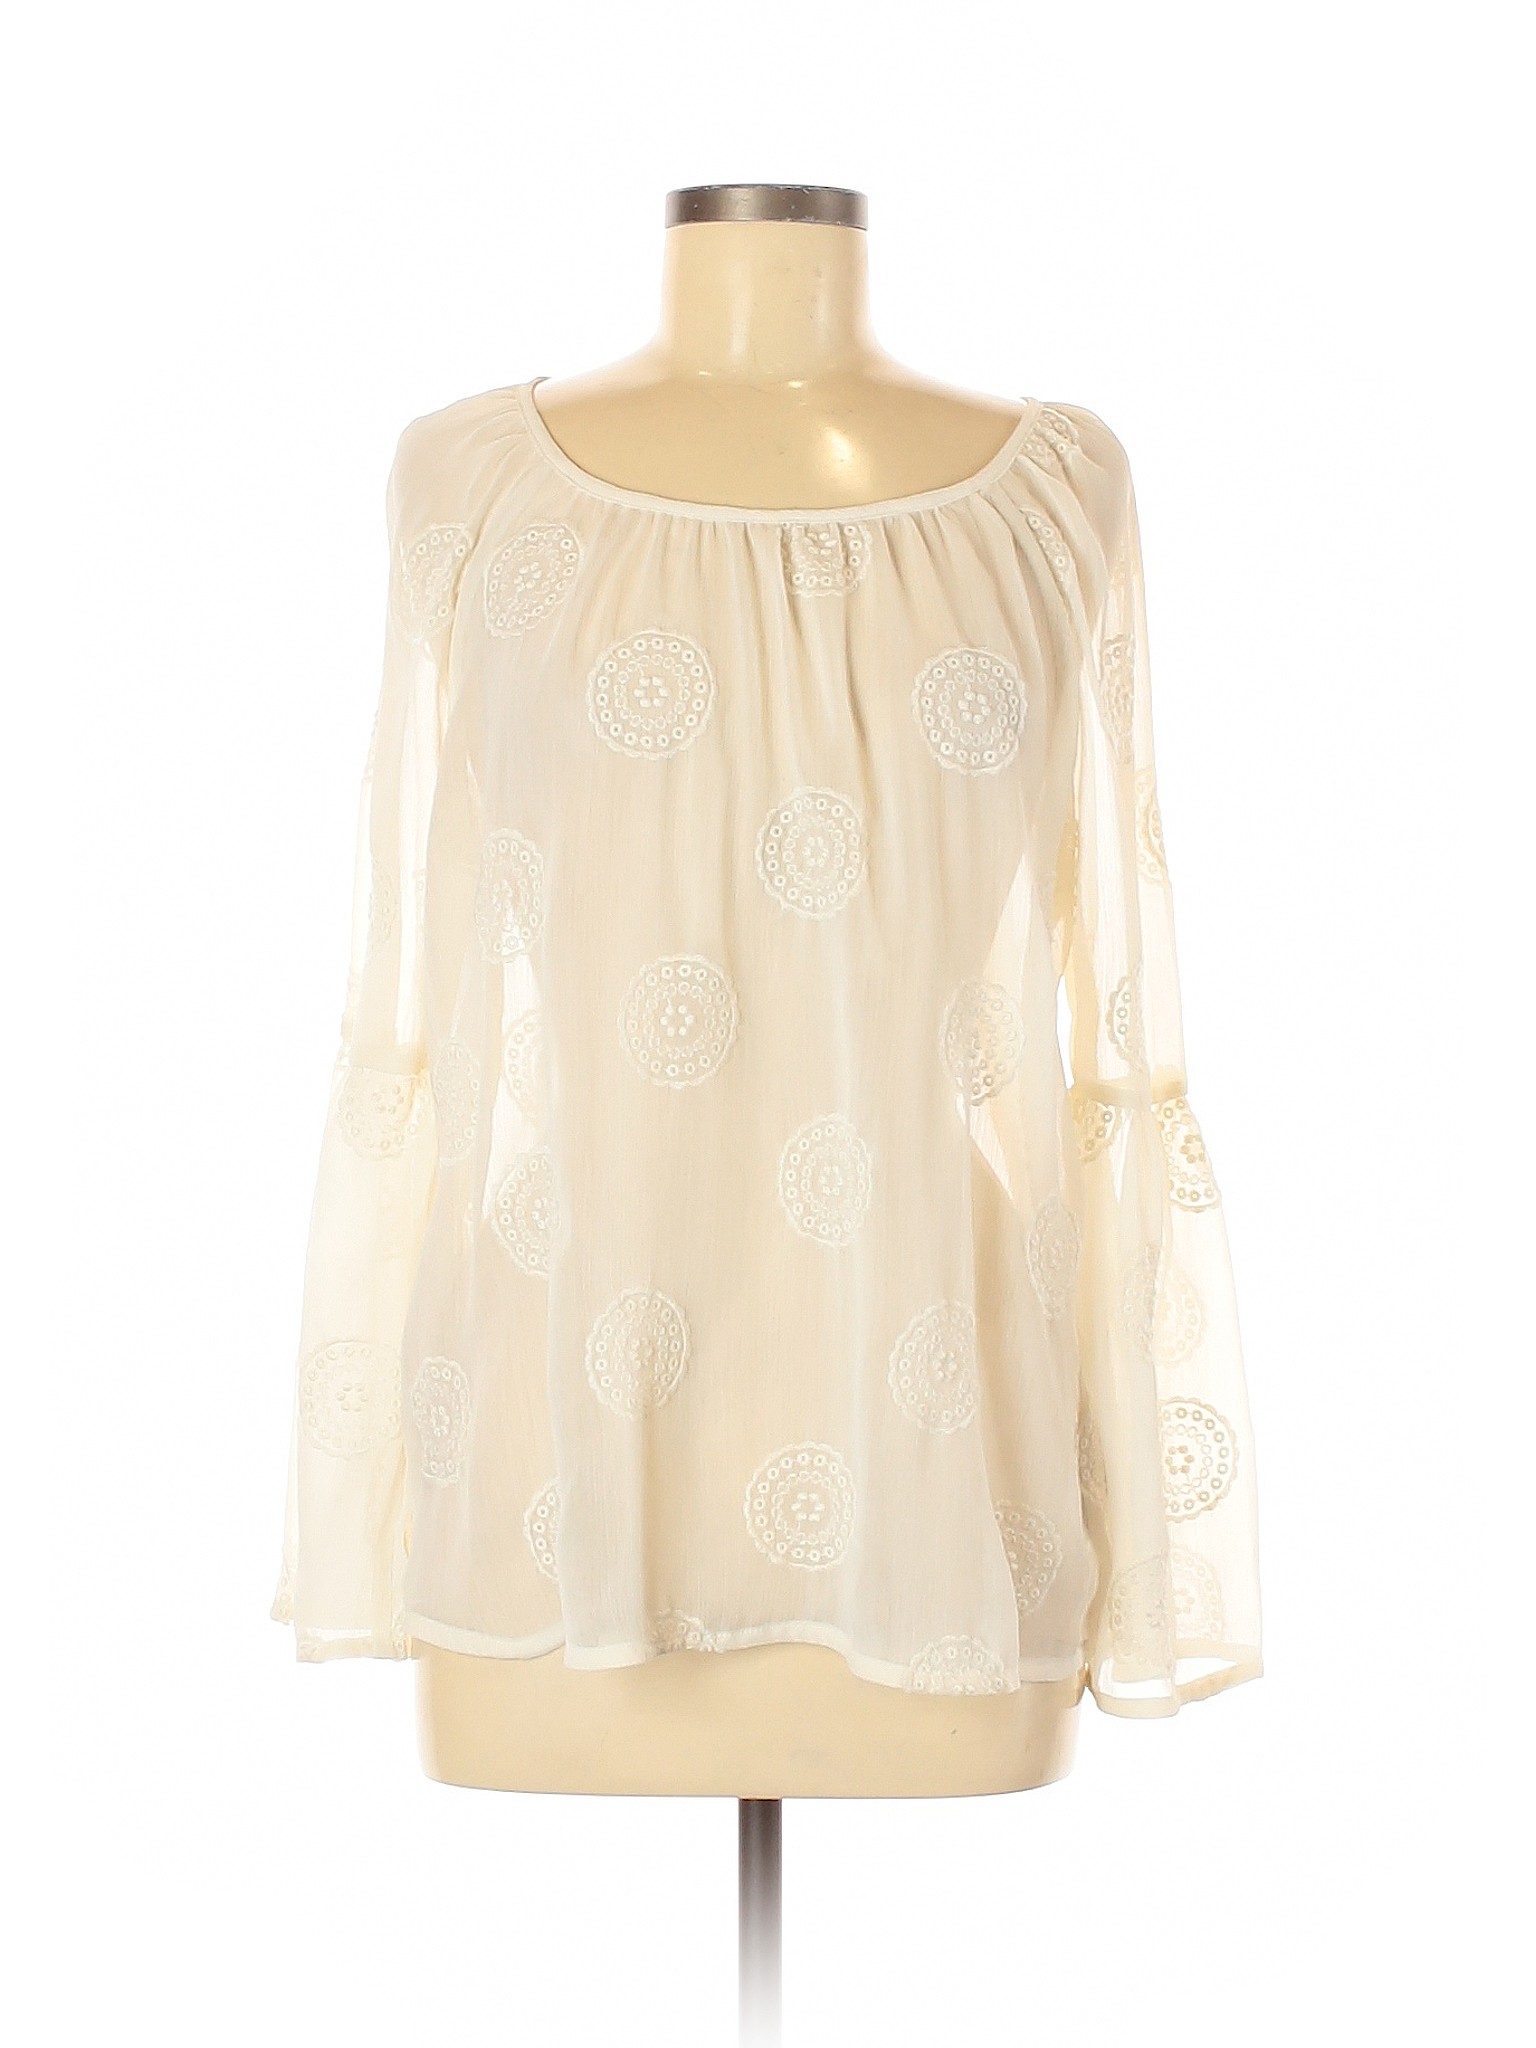 Knox Rose Women White Long Sleeve Blouse S | eBay